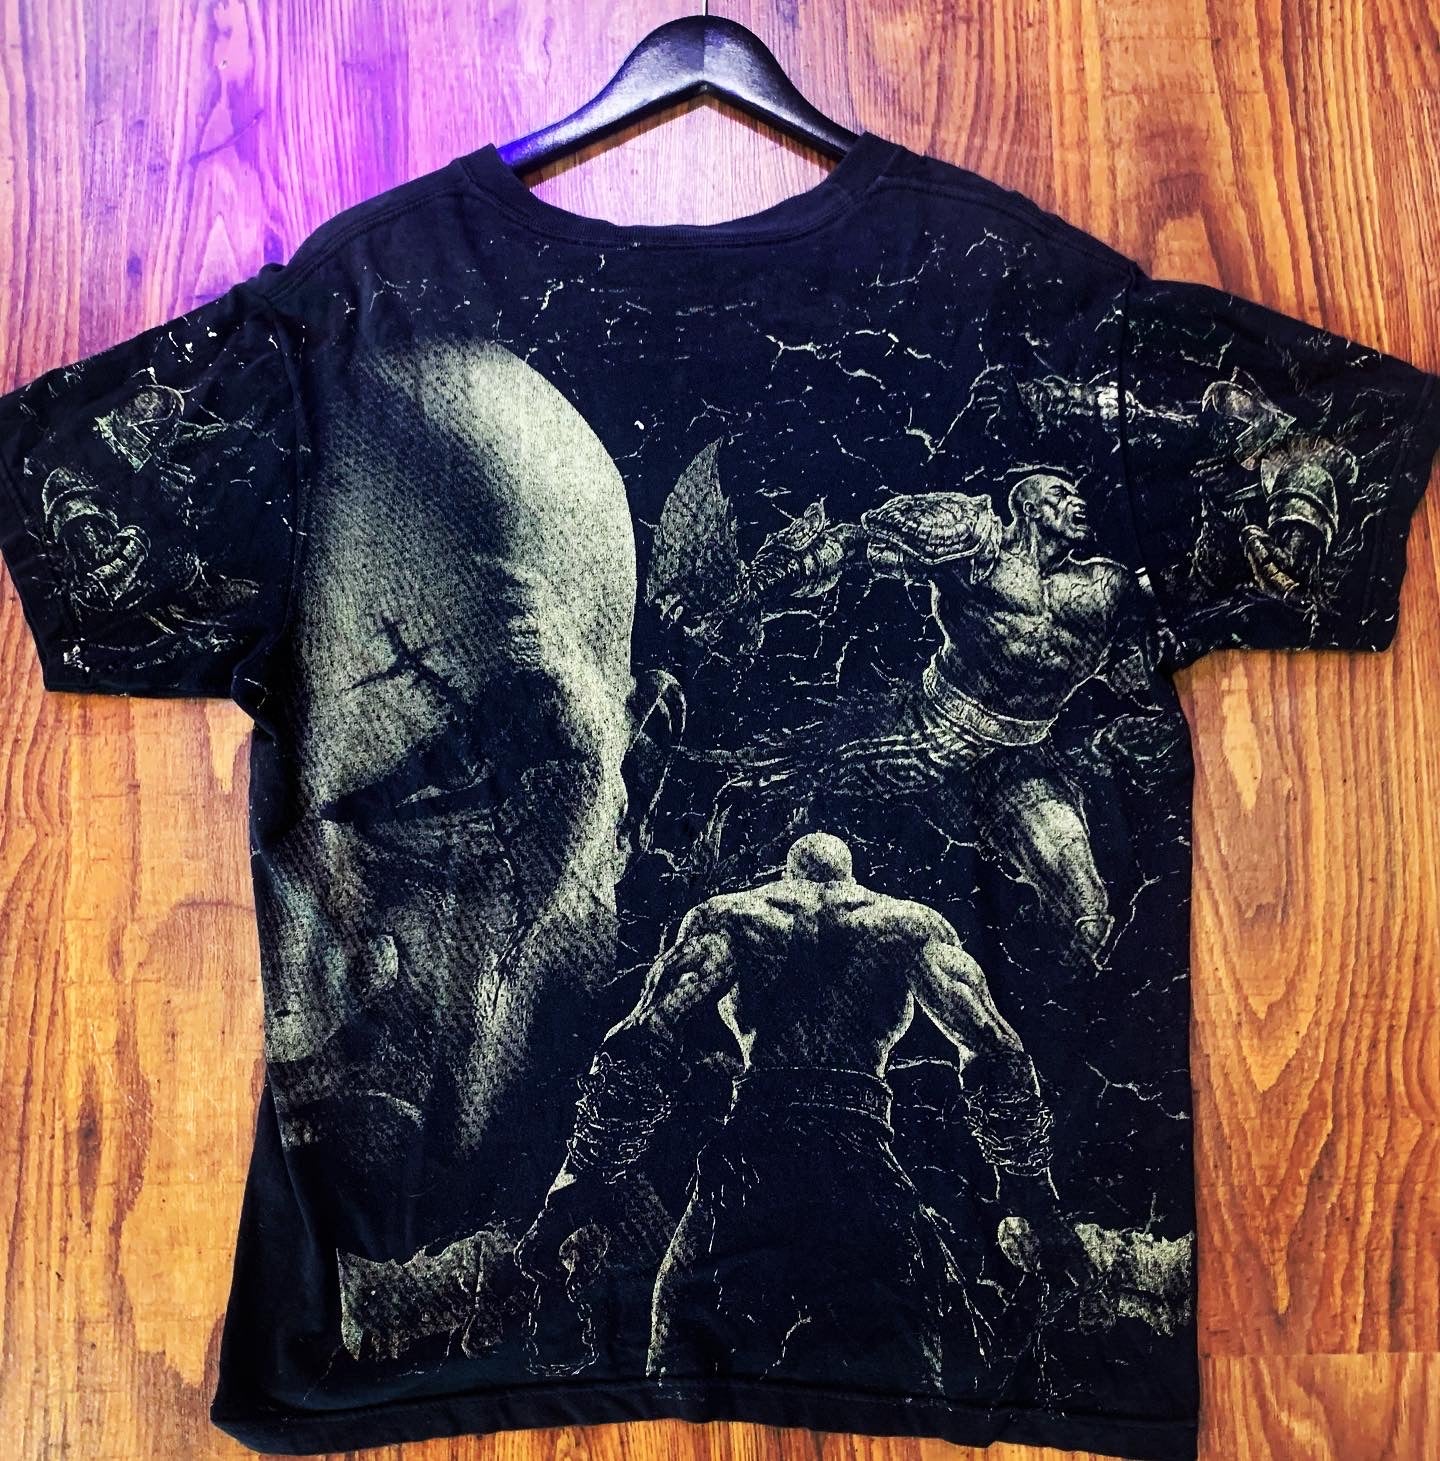 God of war III shirt